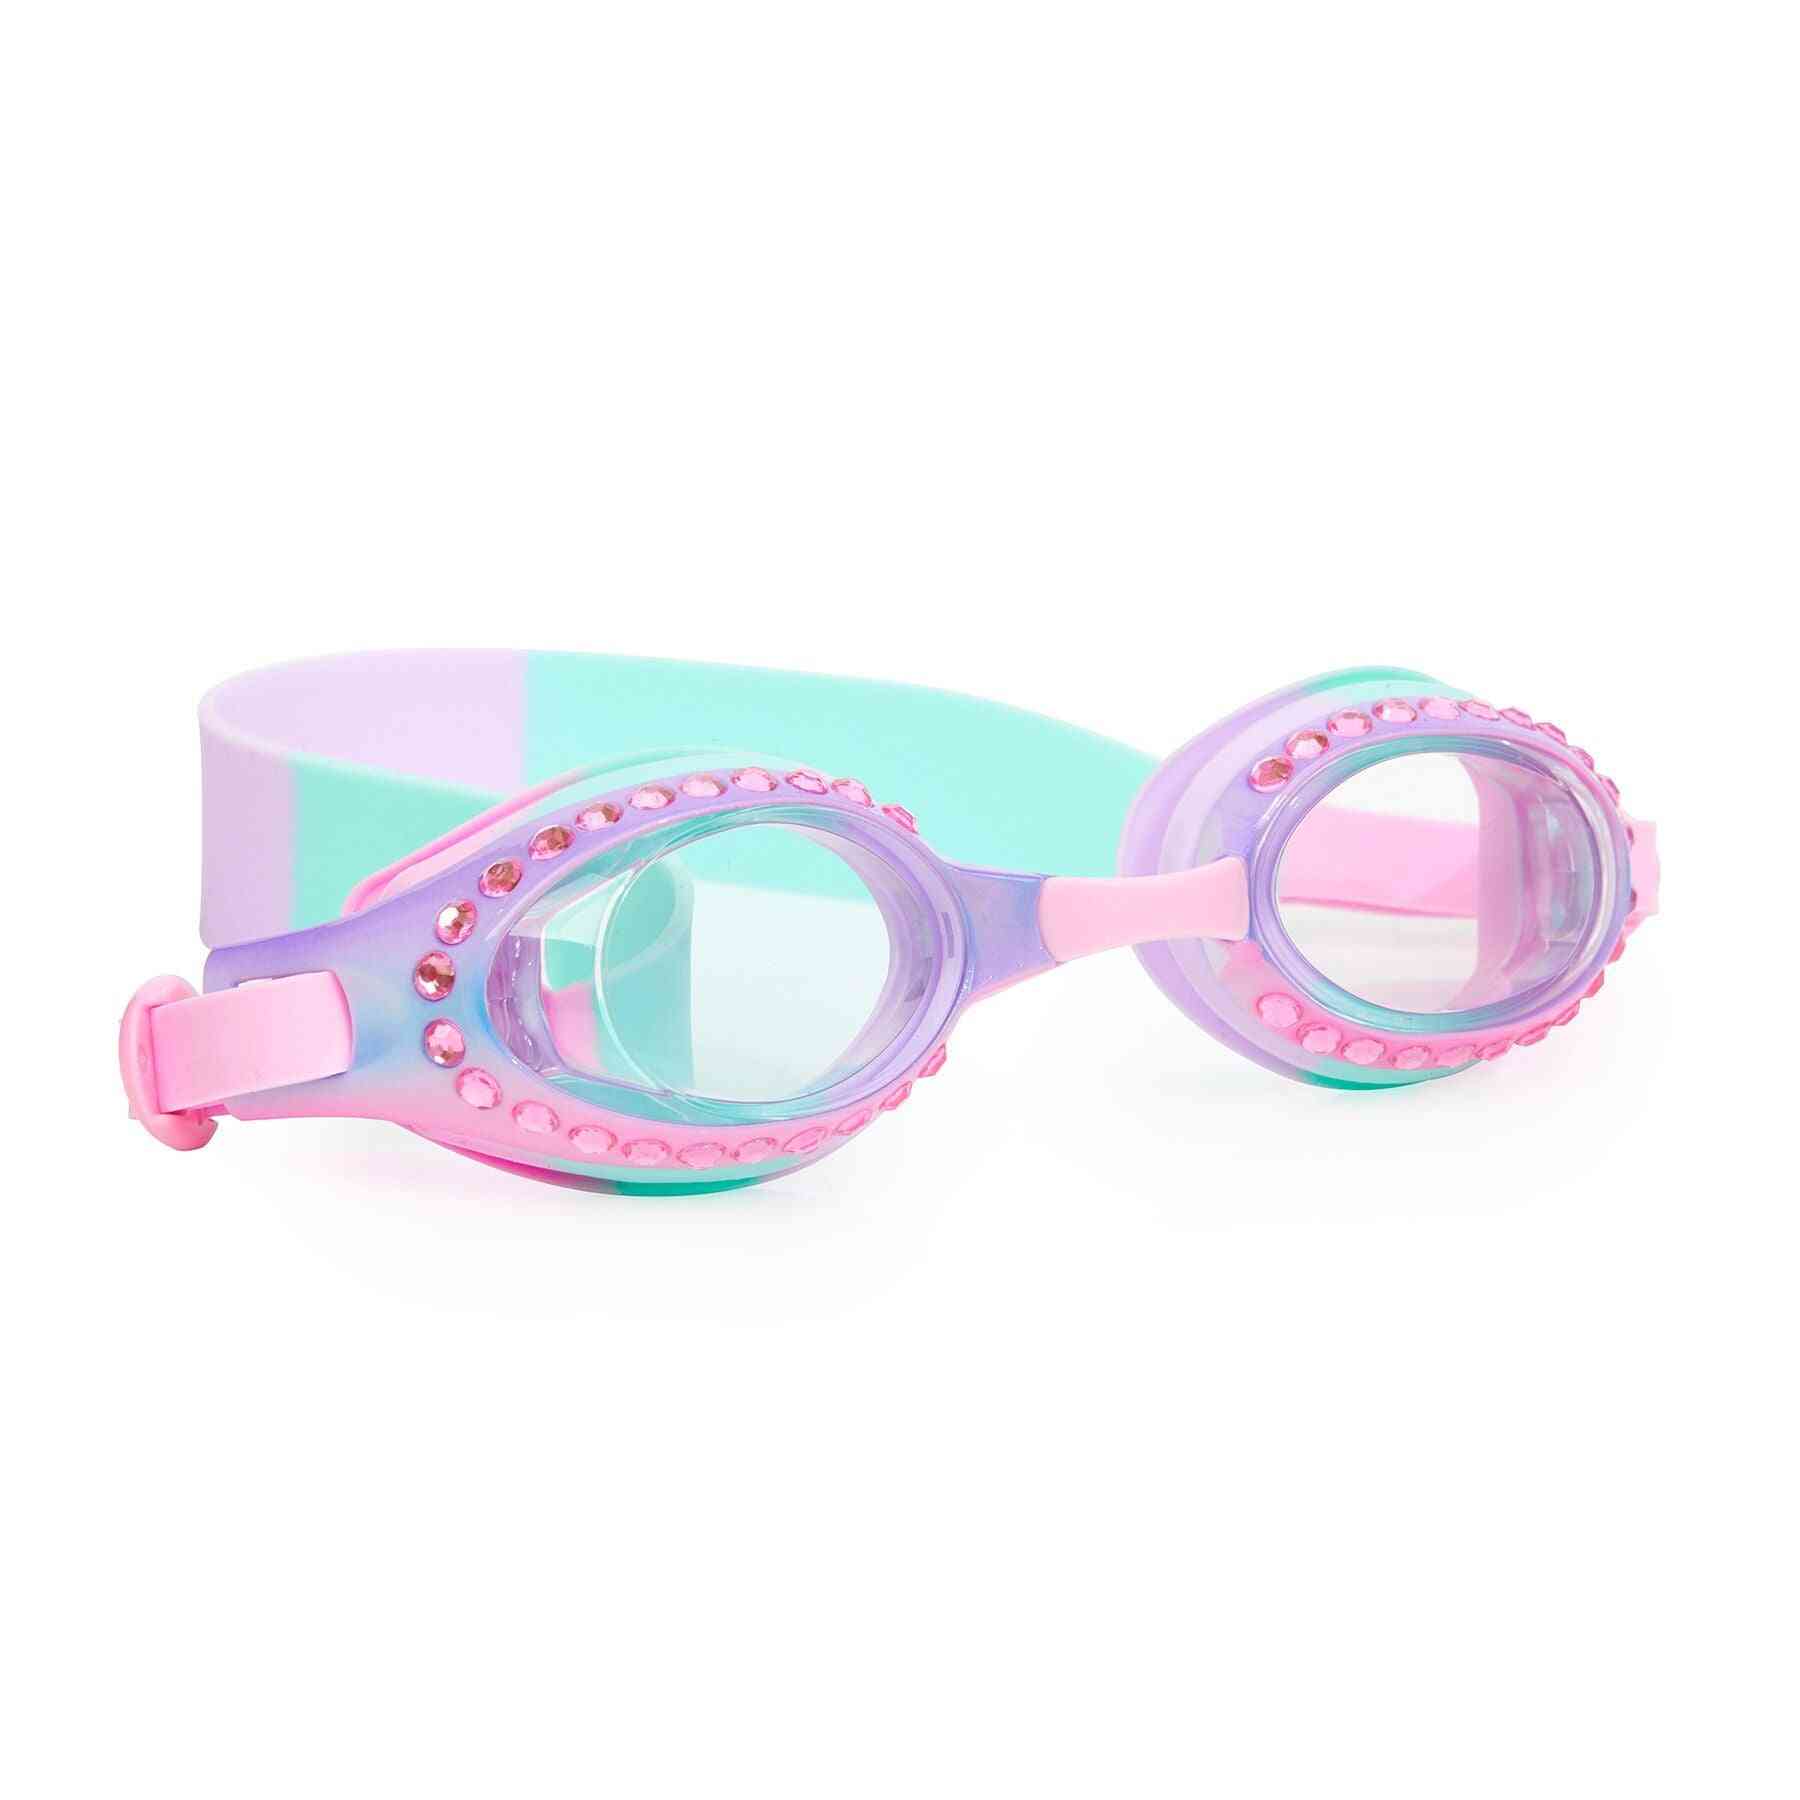 Cartone animato play-occhiali rosa pralina